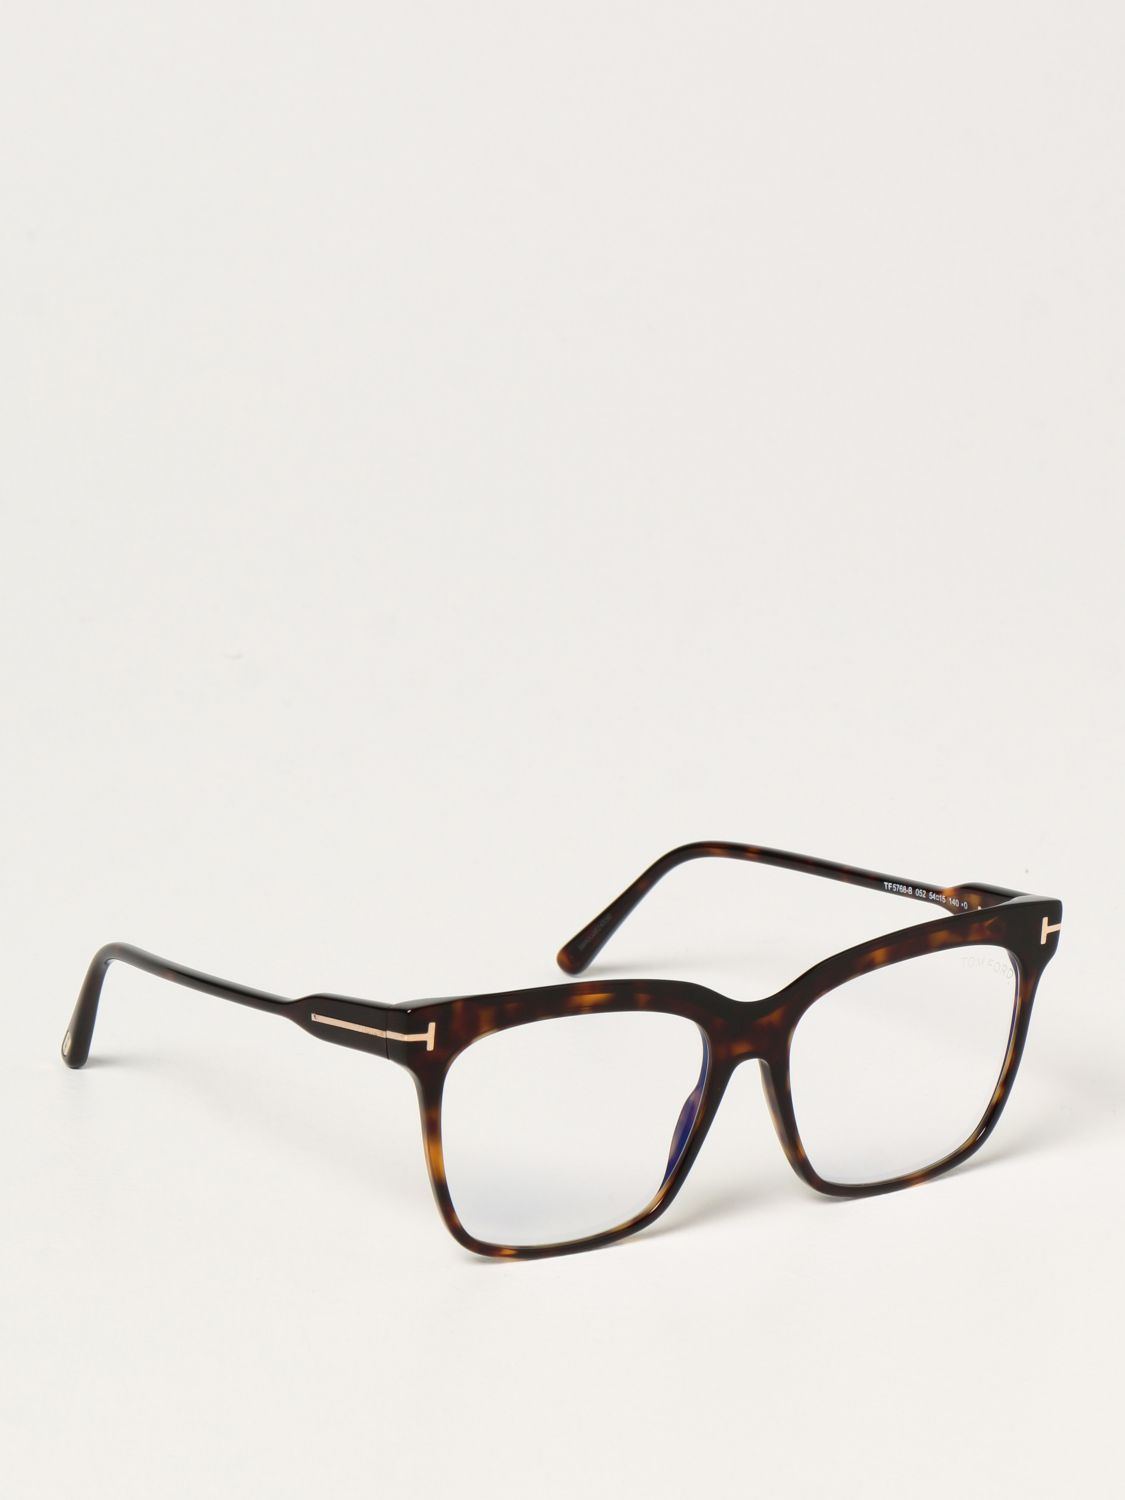 Gafas Tom Ford: Gafas mujer Tom Ford marrón 1